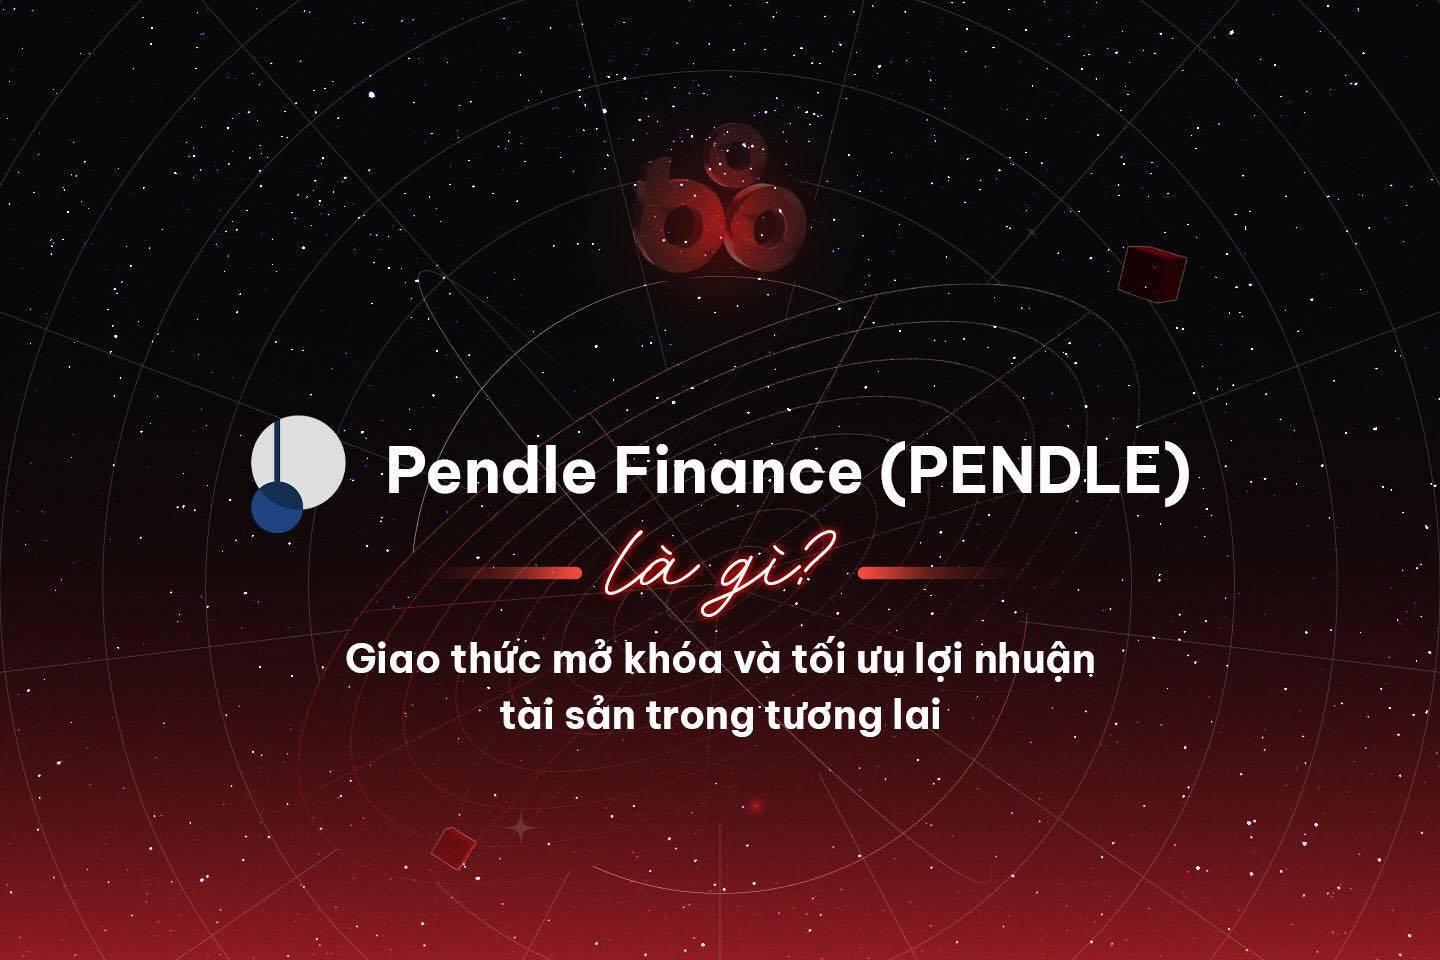 pendle-finance-pendle-la-gi-giao-thuc-mo-khoa-va-toi-uu-loi-nhuan-tai-san-trong-tuong-lai